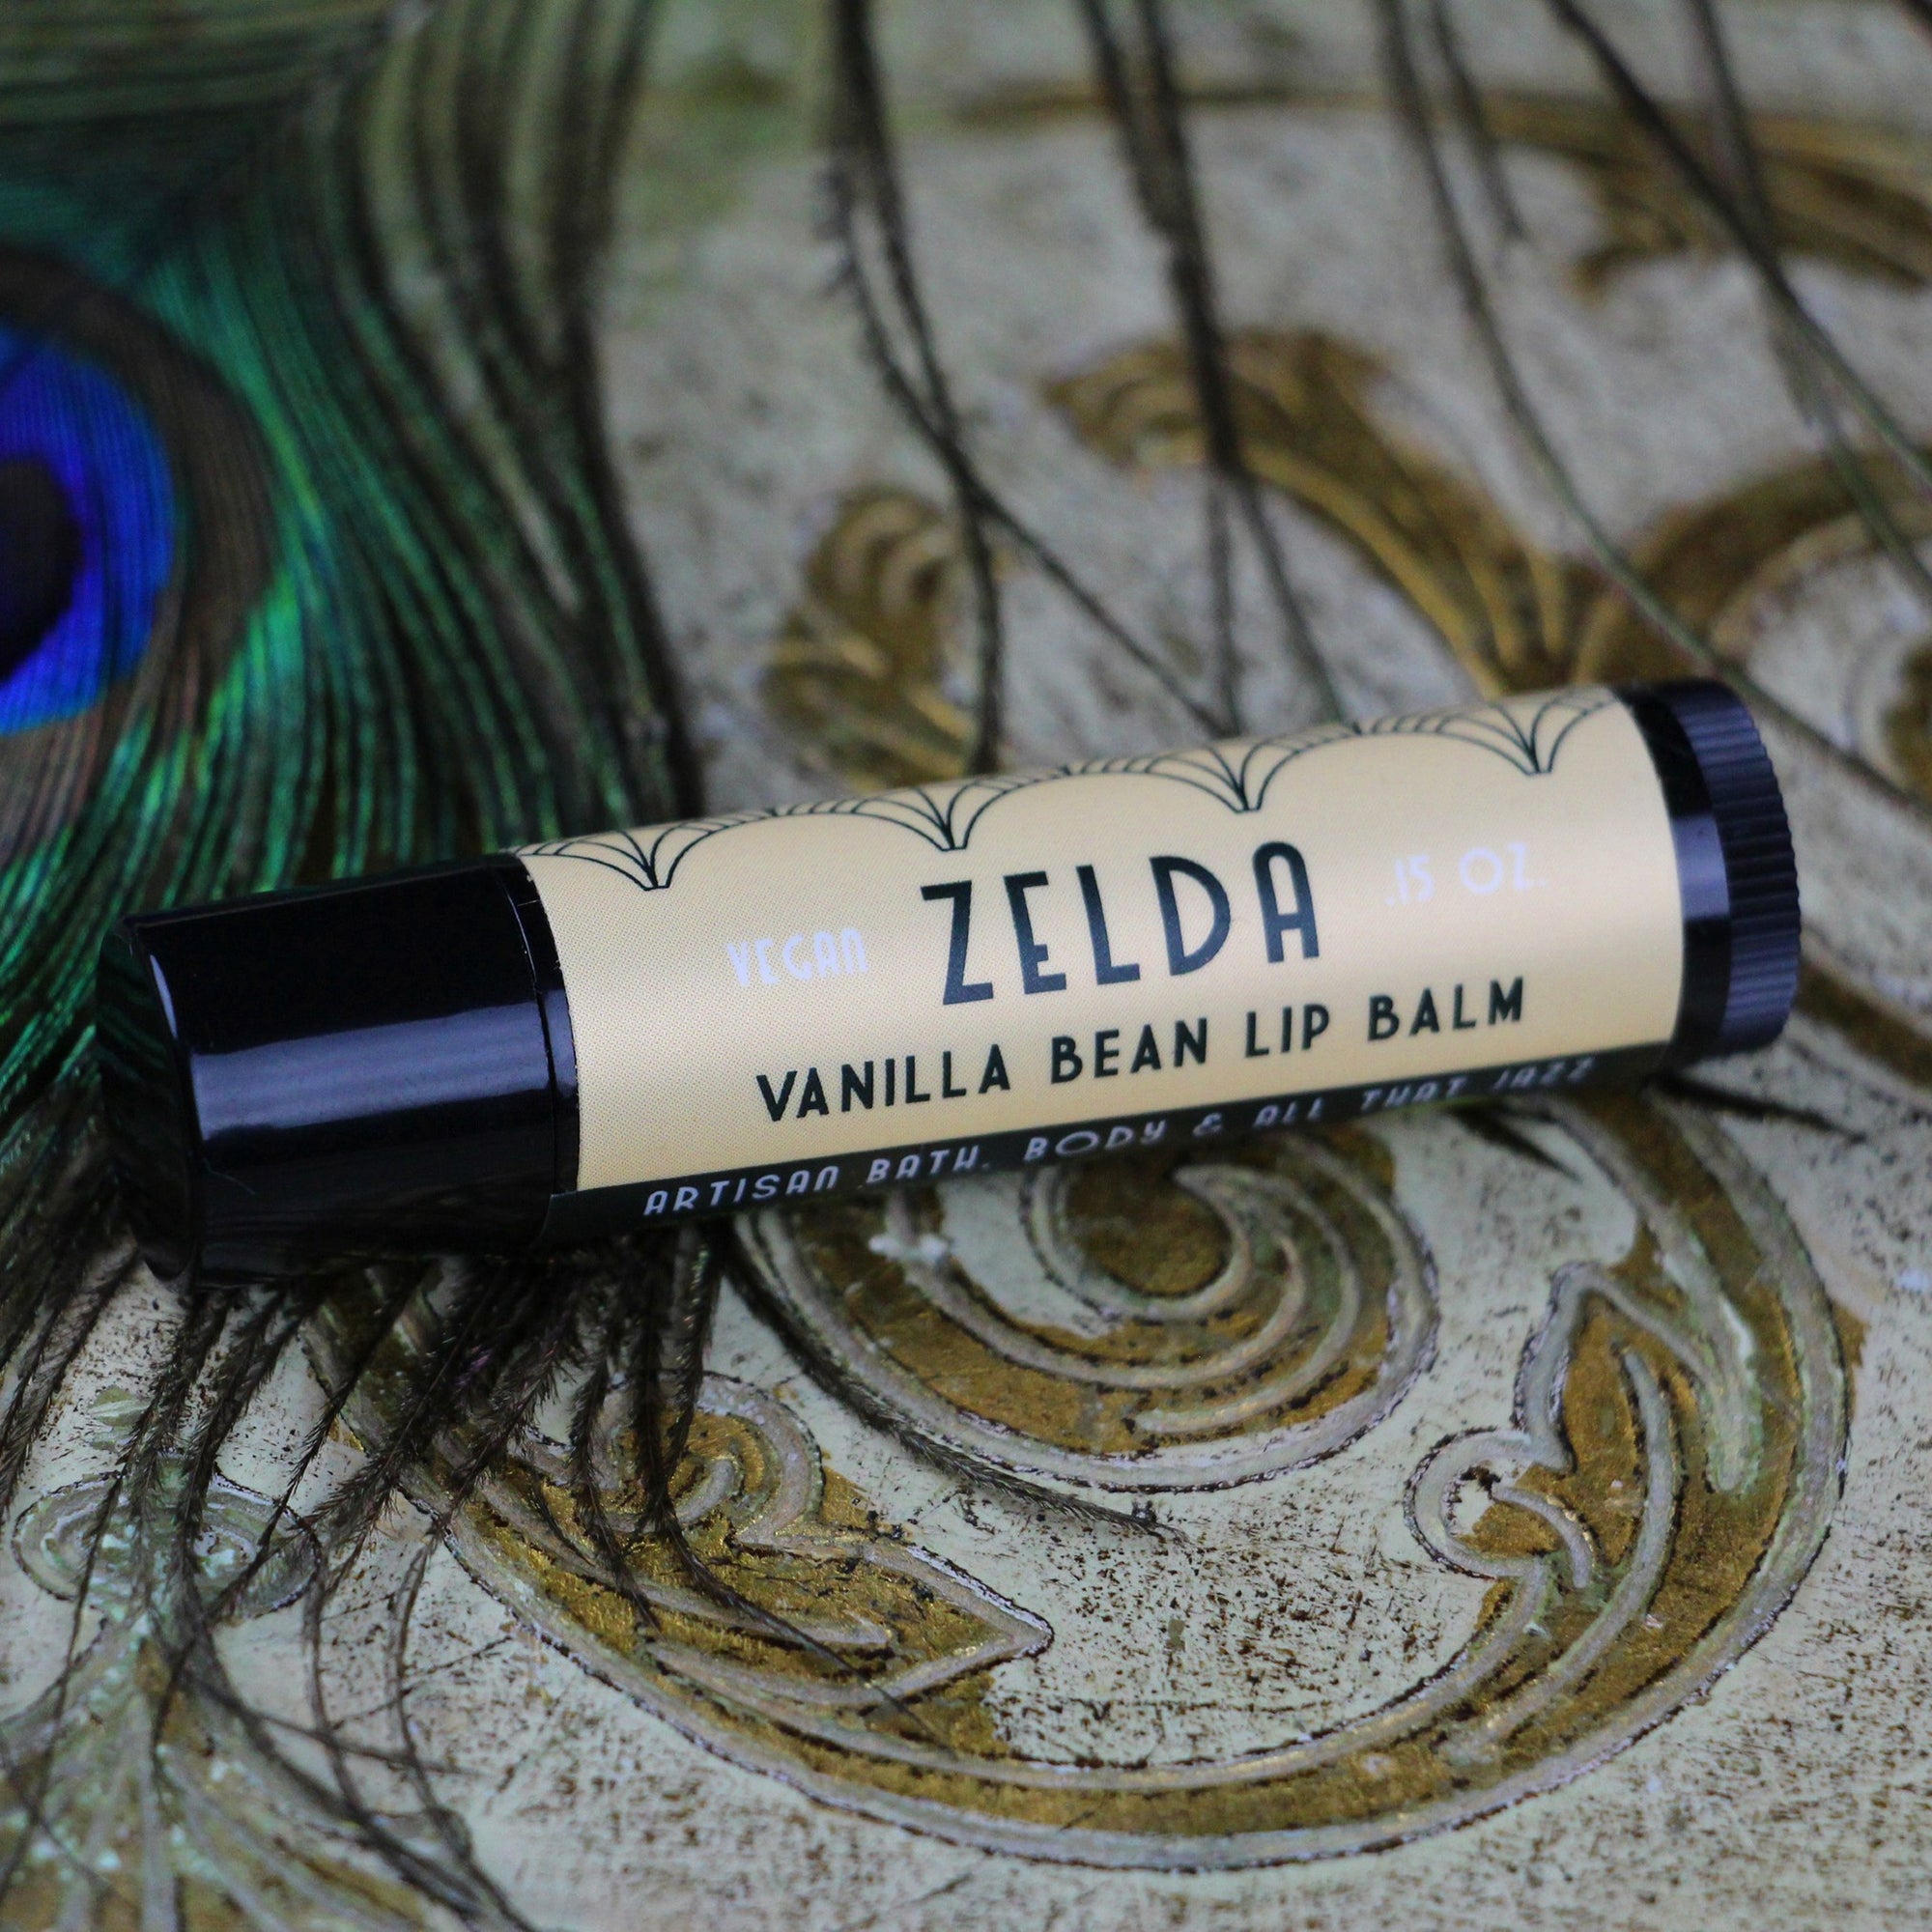 Zelda Vanilla Bean Lip Balm | Gilded Olivbe Apothecary